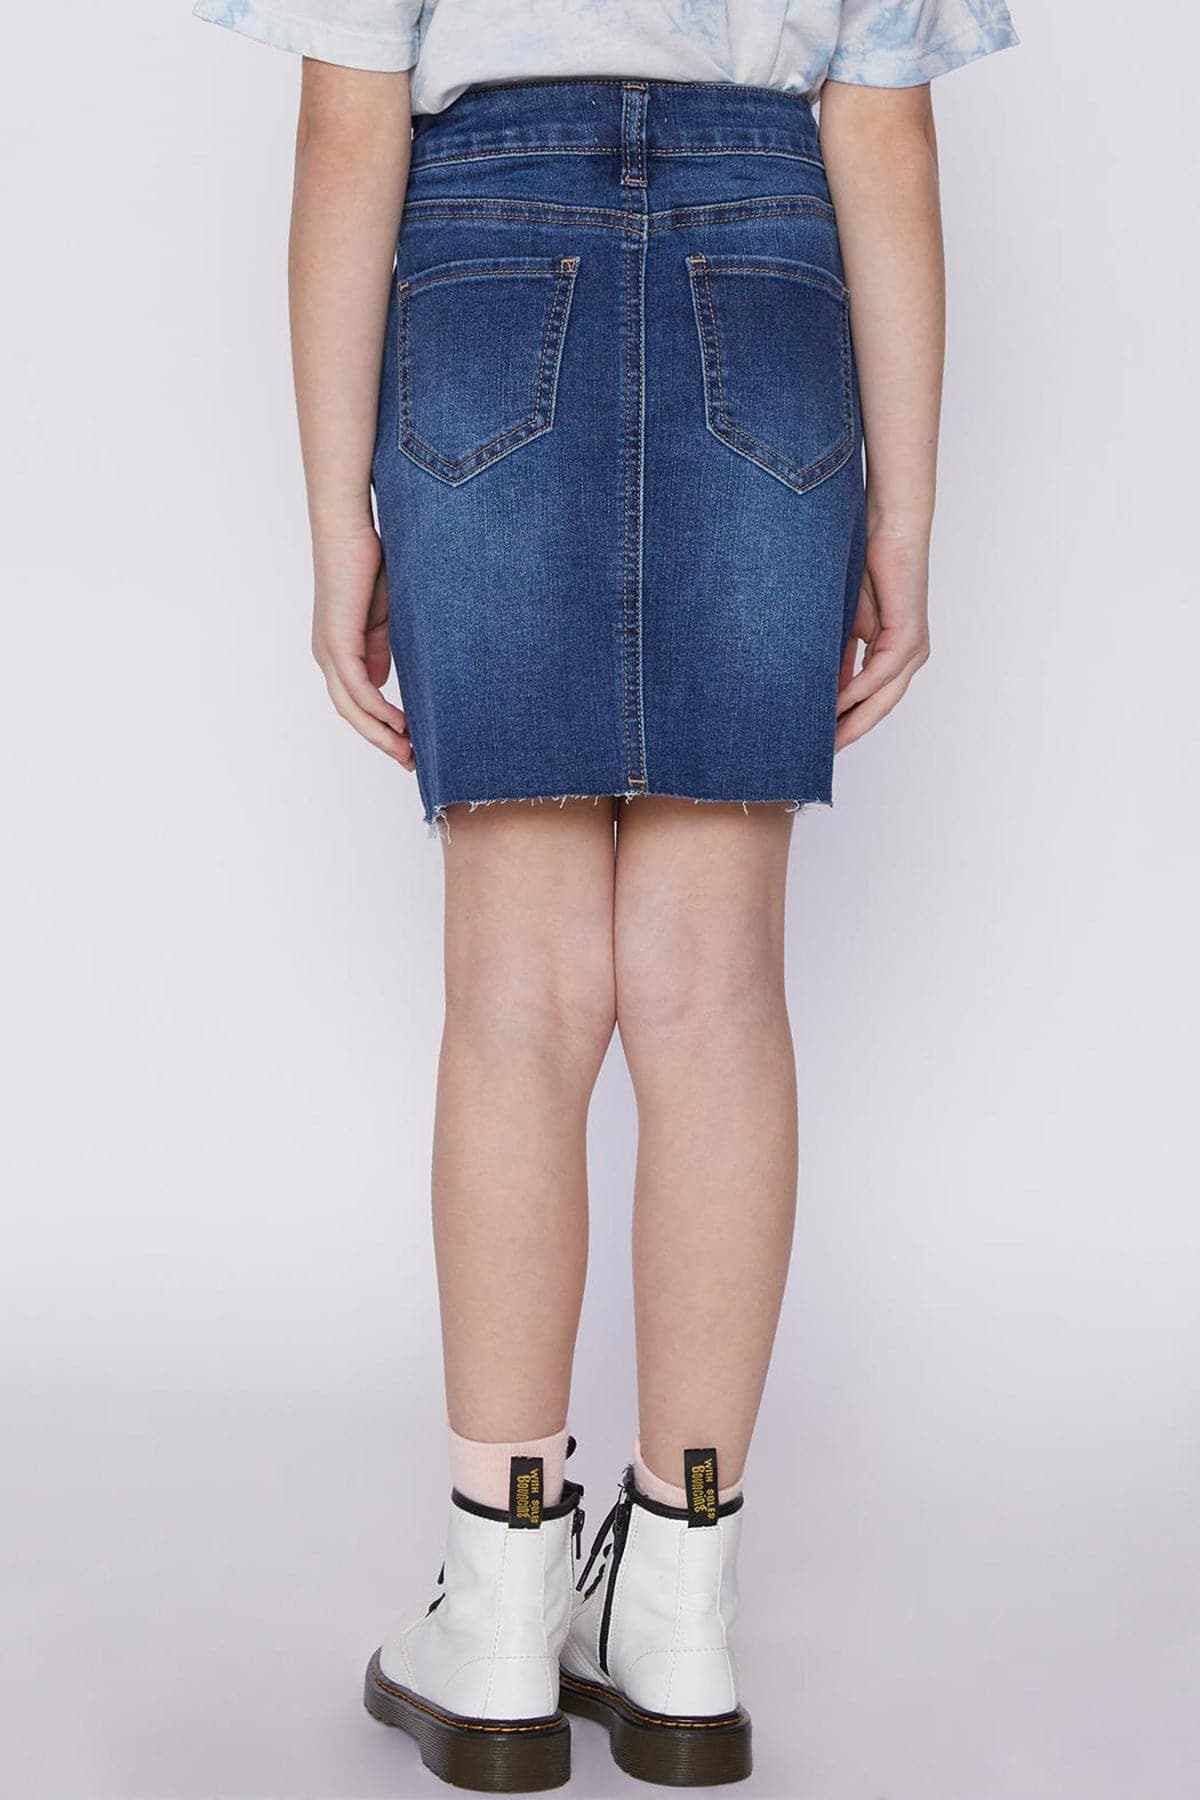 Girls Four Button Denim Skirt With Distressed Details Gk44757